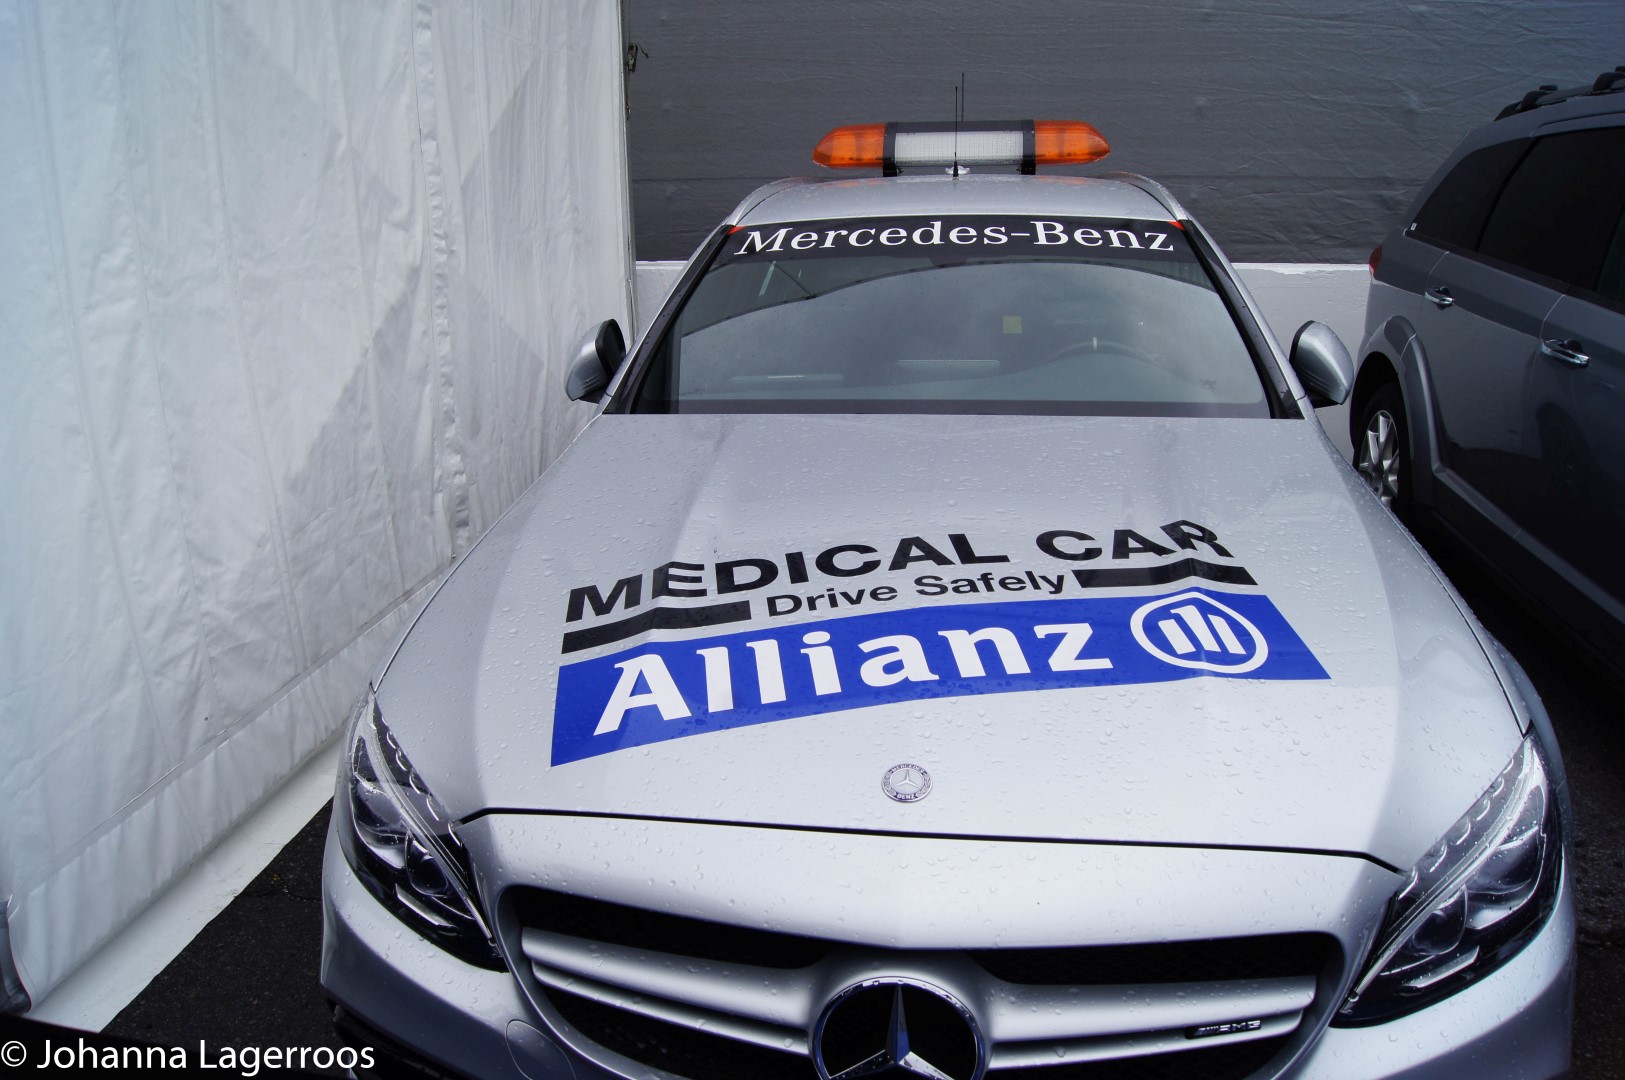 Medical car